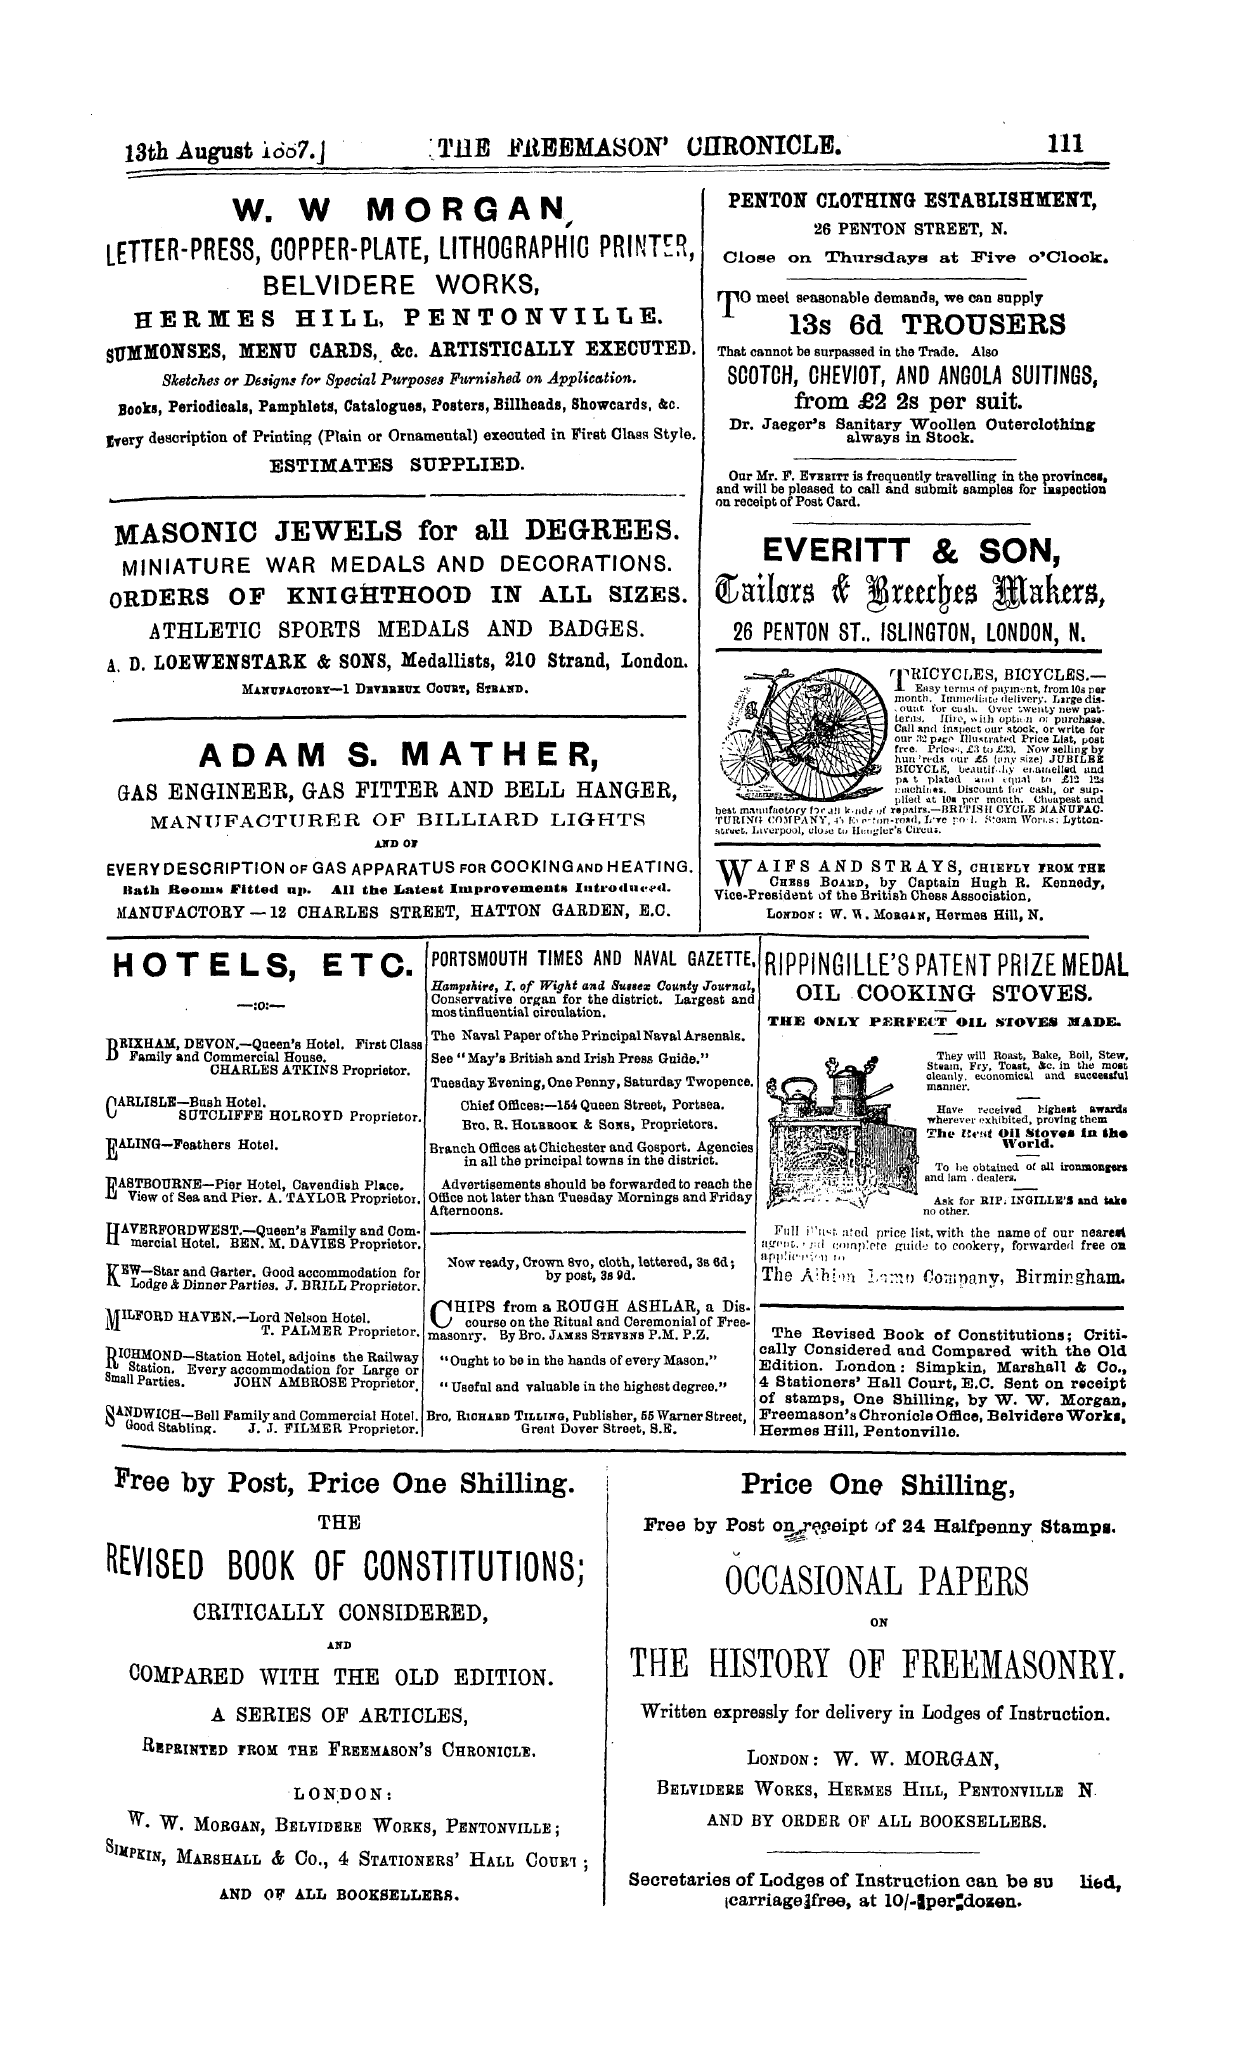 The Freemason's Chronicle: 1887-08-13 - Ad01502